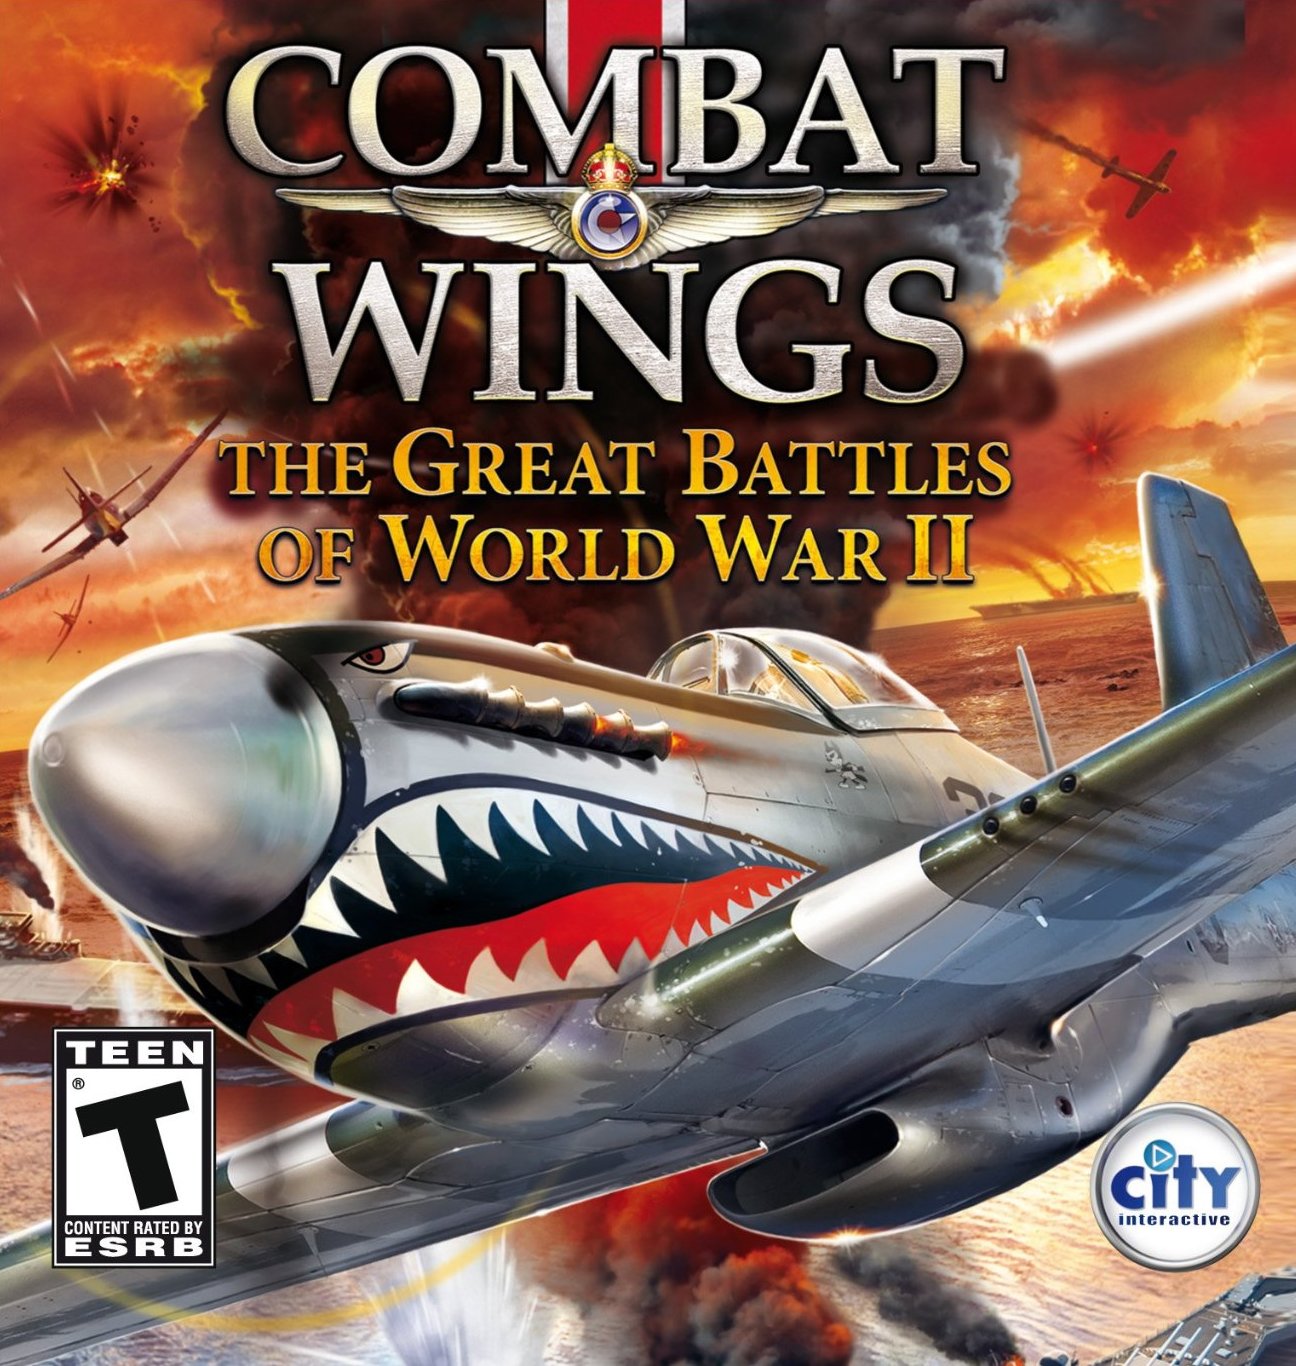 Combat Wings #21